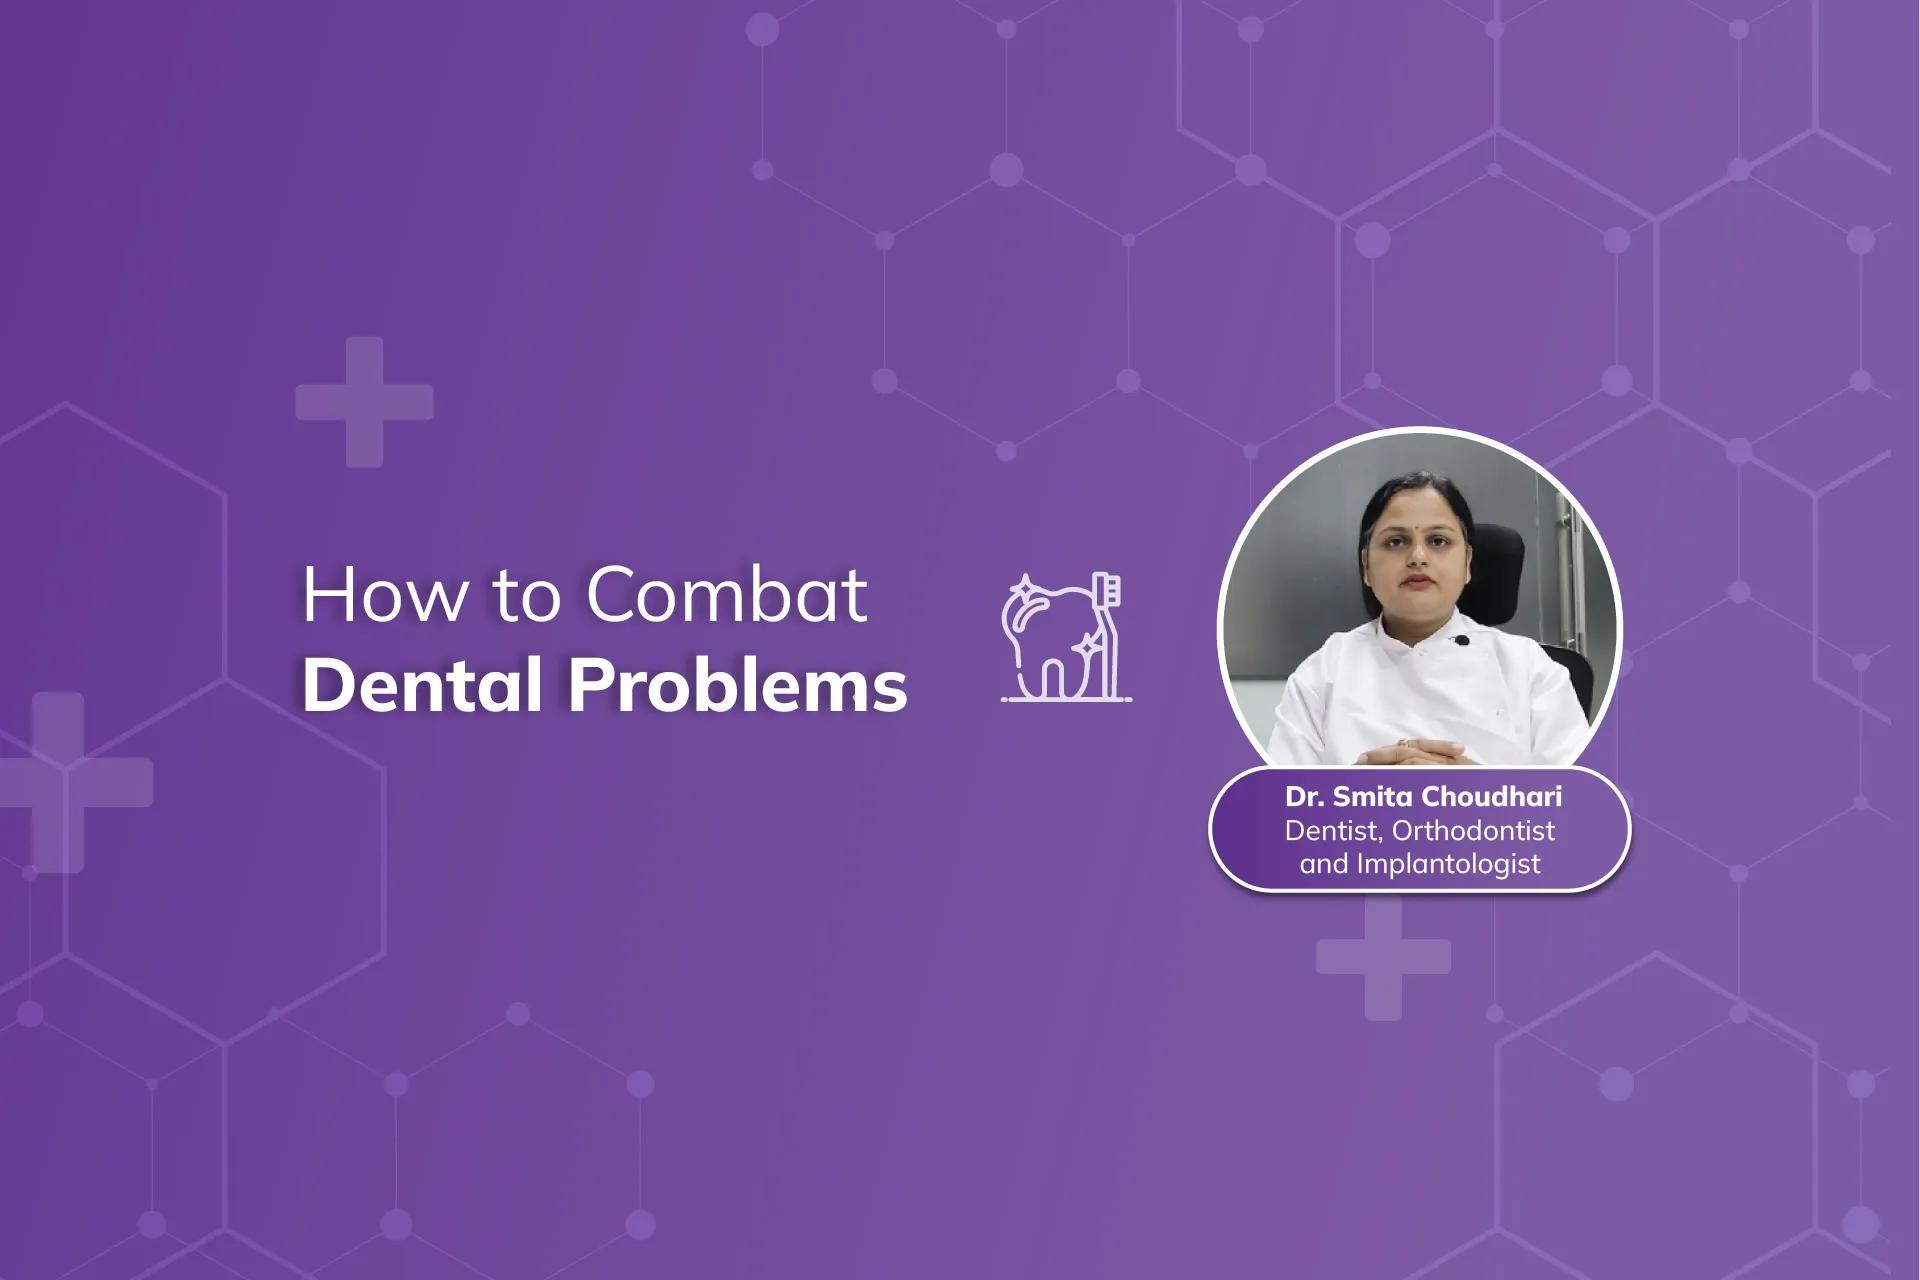 How to Combat Dental Problems by Dr. Smita Choudhari